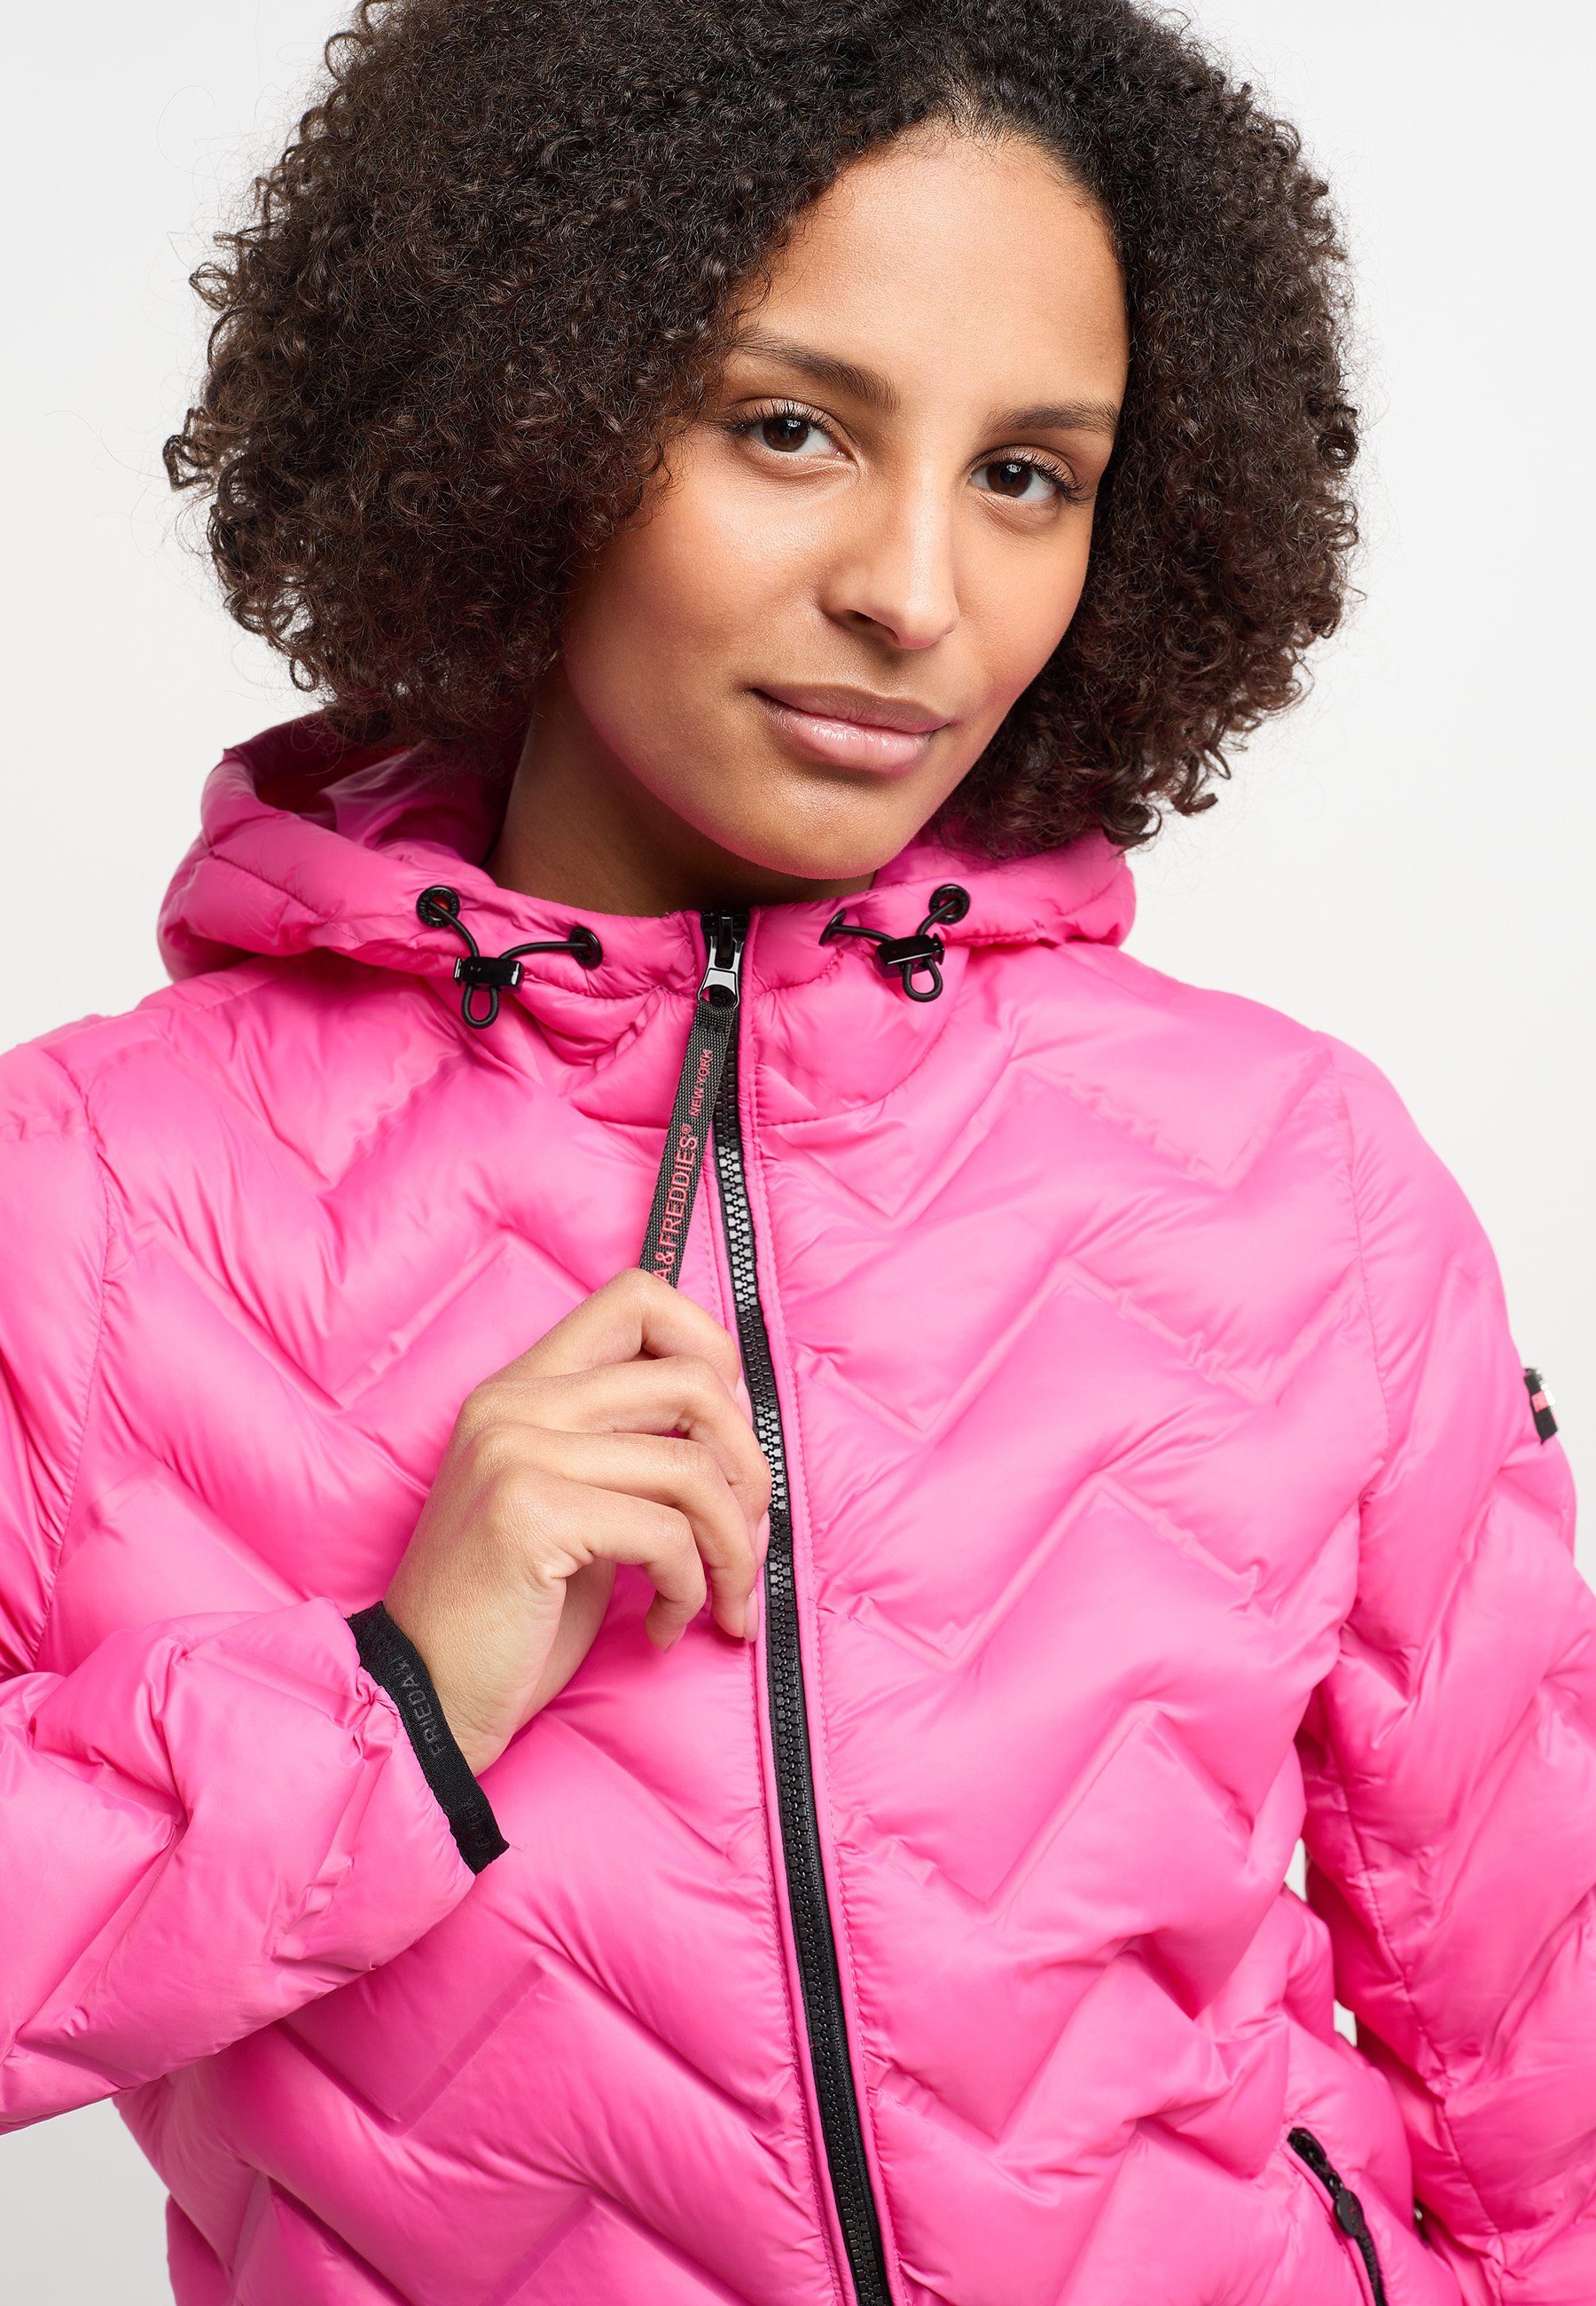 Frieda & Freddies NY Steppjacke pink Thermolite mit Reißverschluss Mailynn Jacket